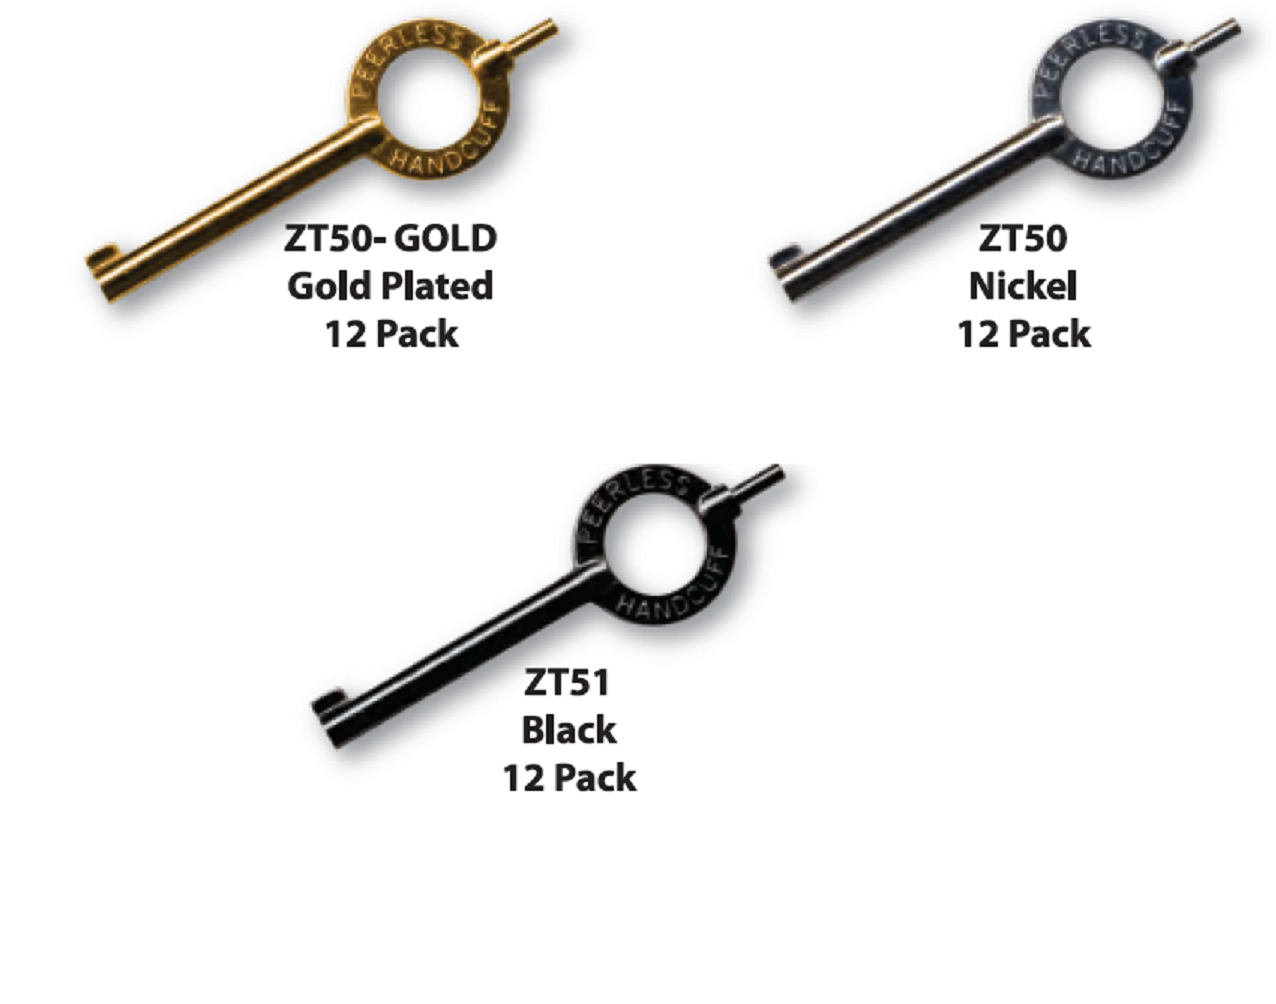 Handcuff Key Variety Pack